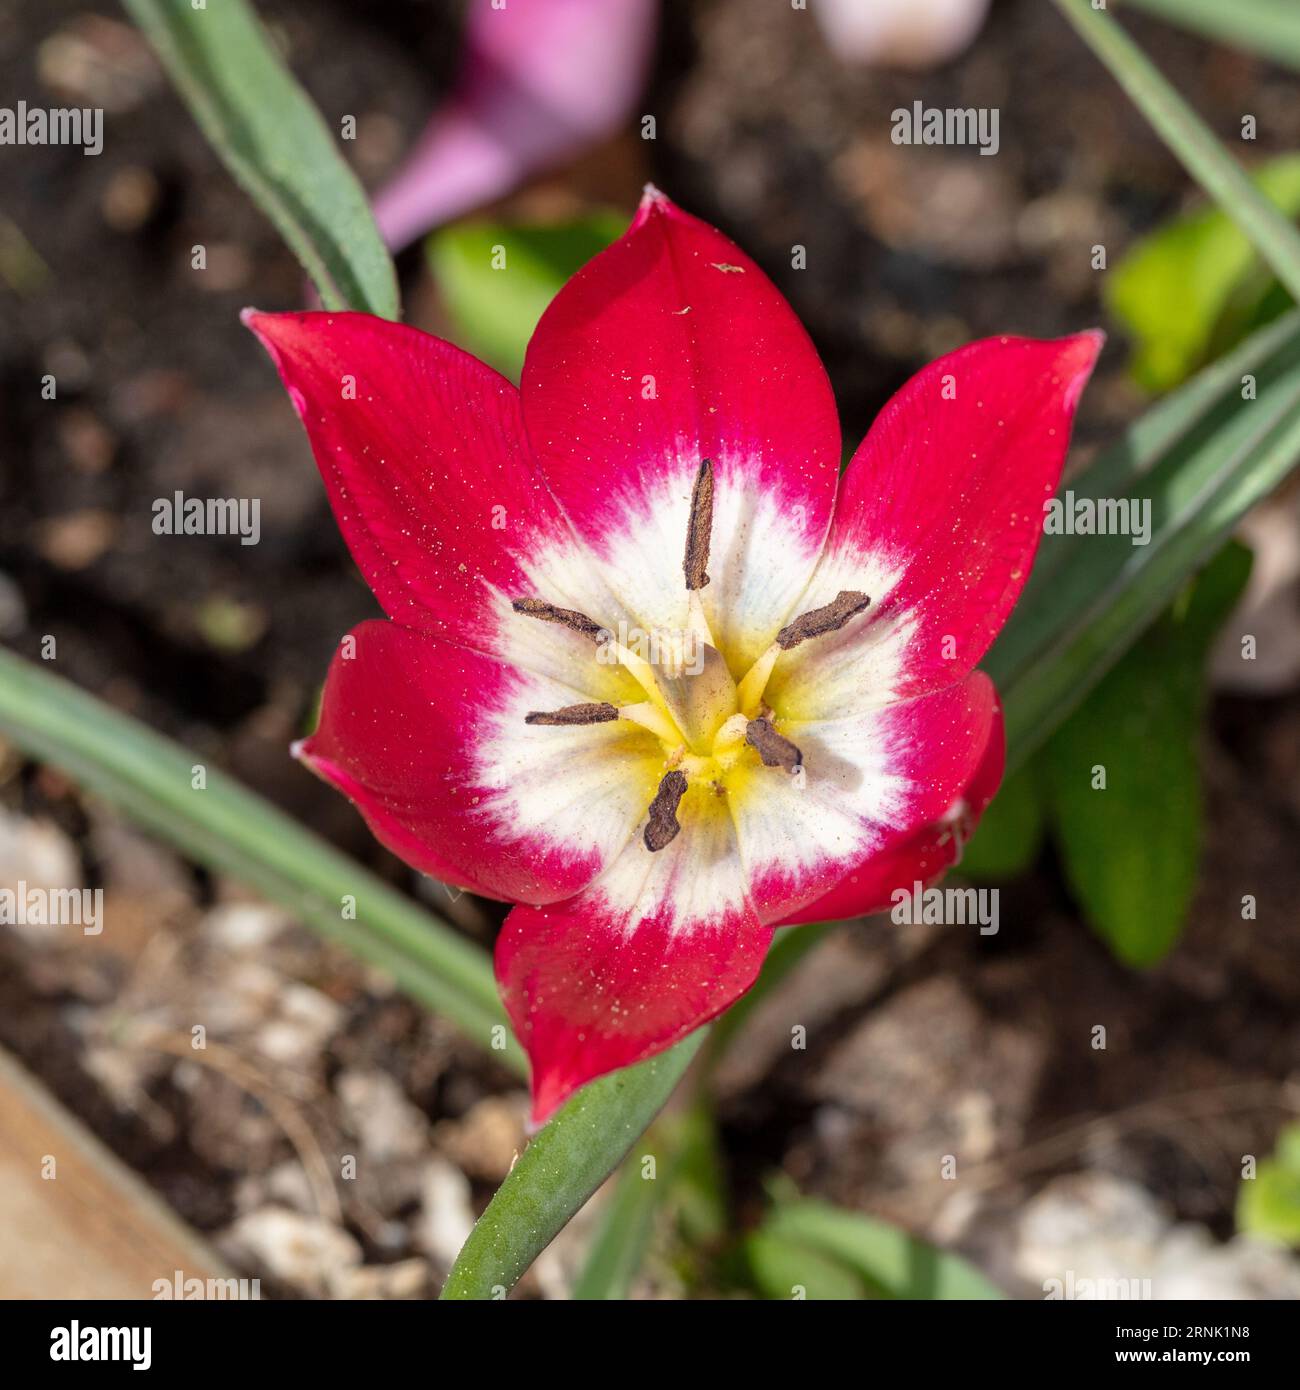 'Tiny Timo' Botanical tulip, Botanisk tulpan (Tulipa hageri x aucheriana) Stock Photo